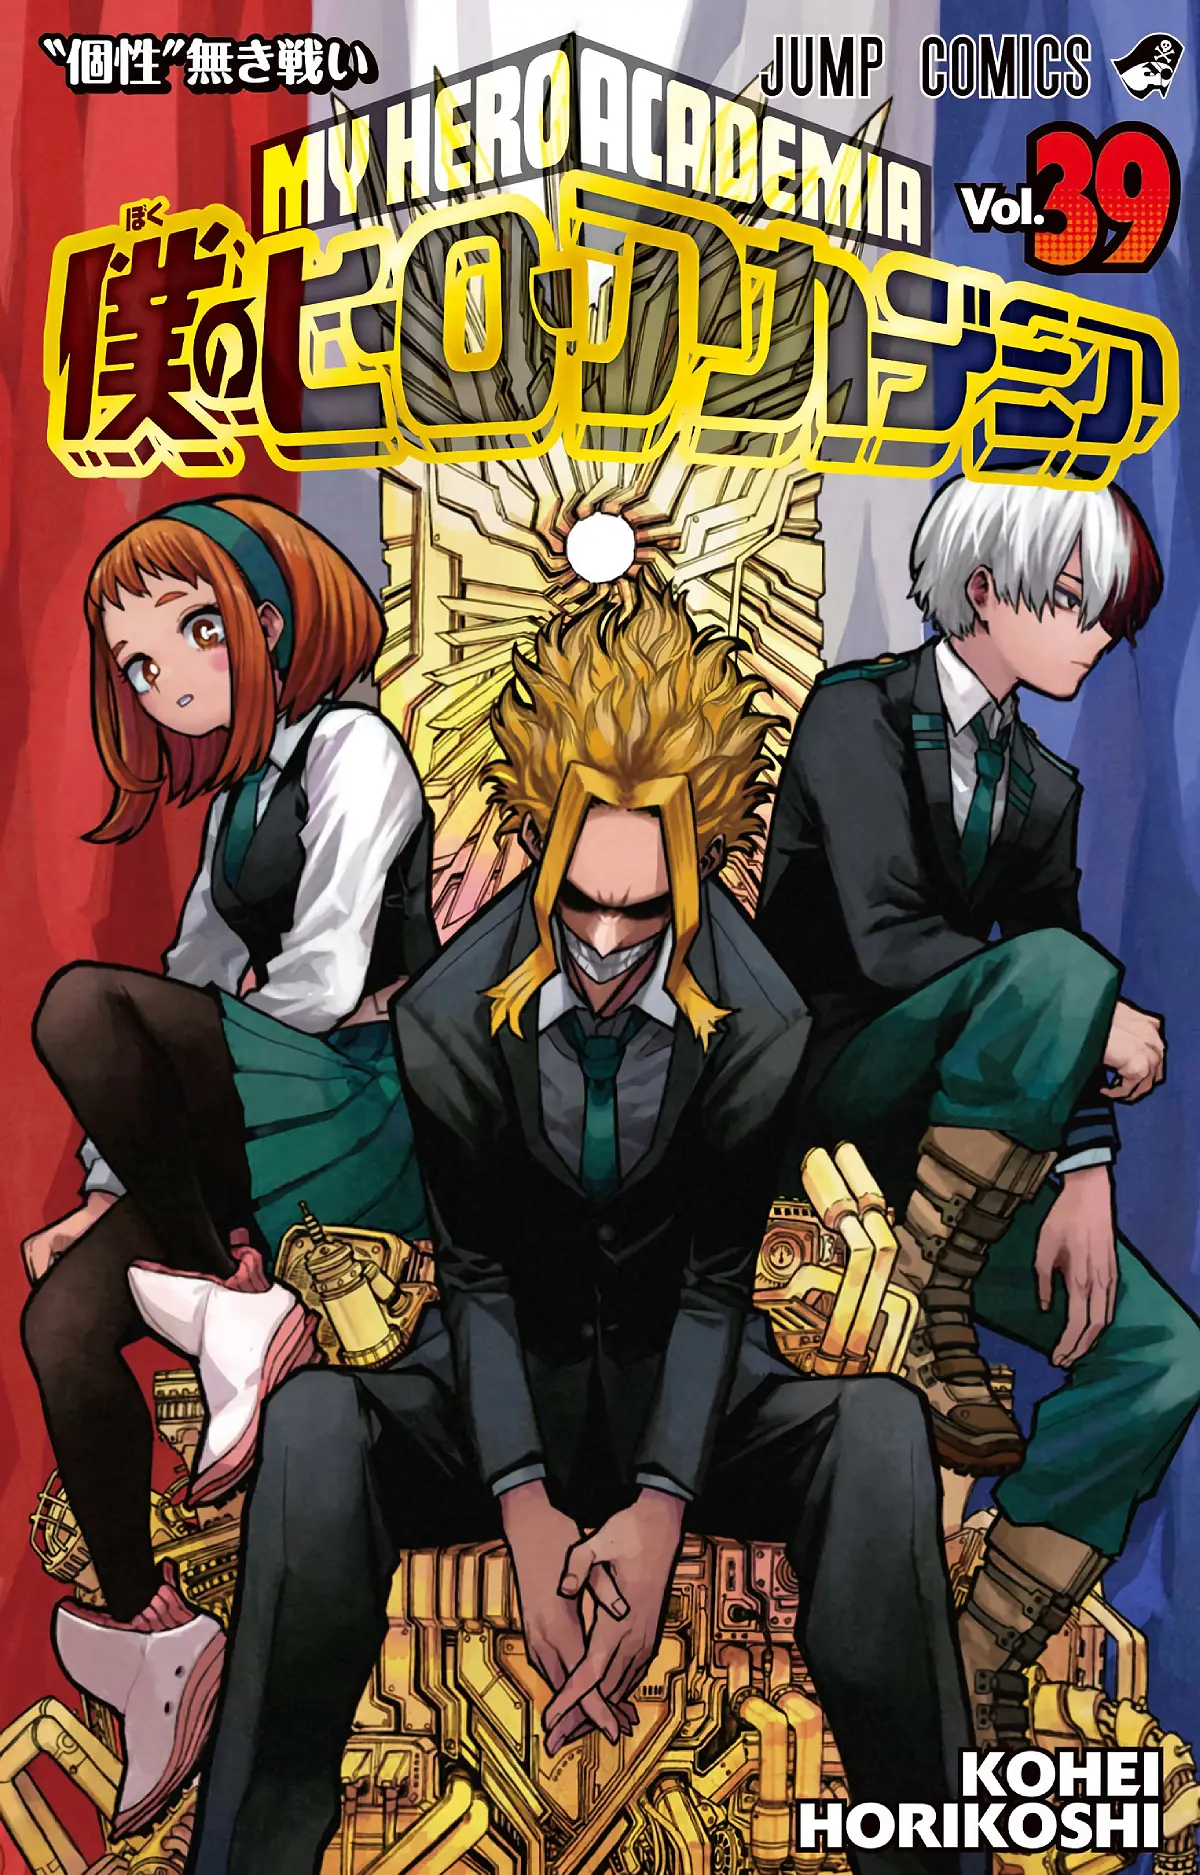 Boku No Hero Academia (My Hero Academia) Manga Vol 39